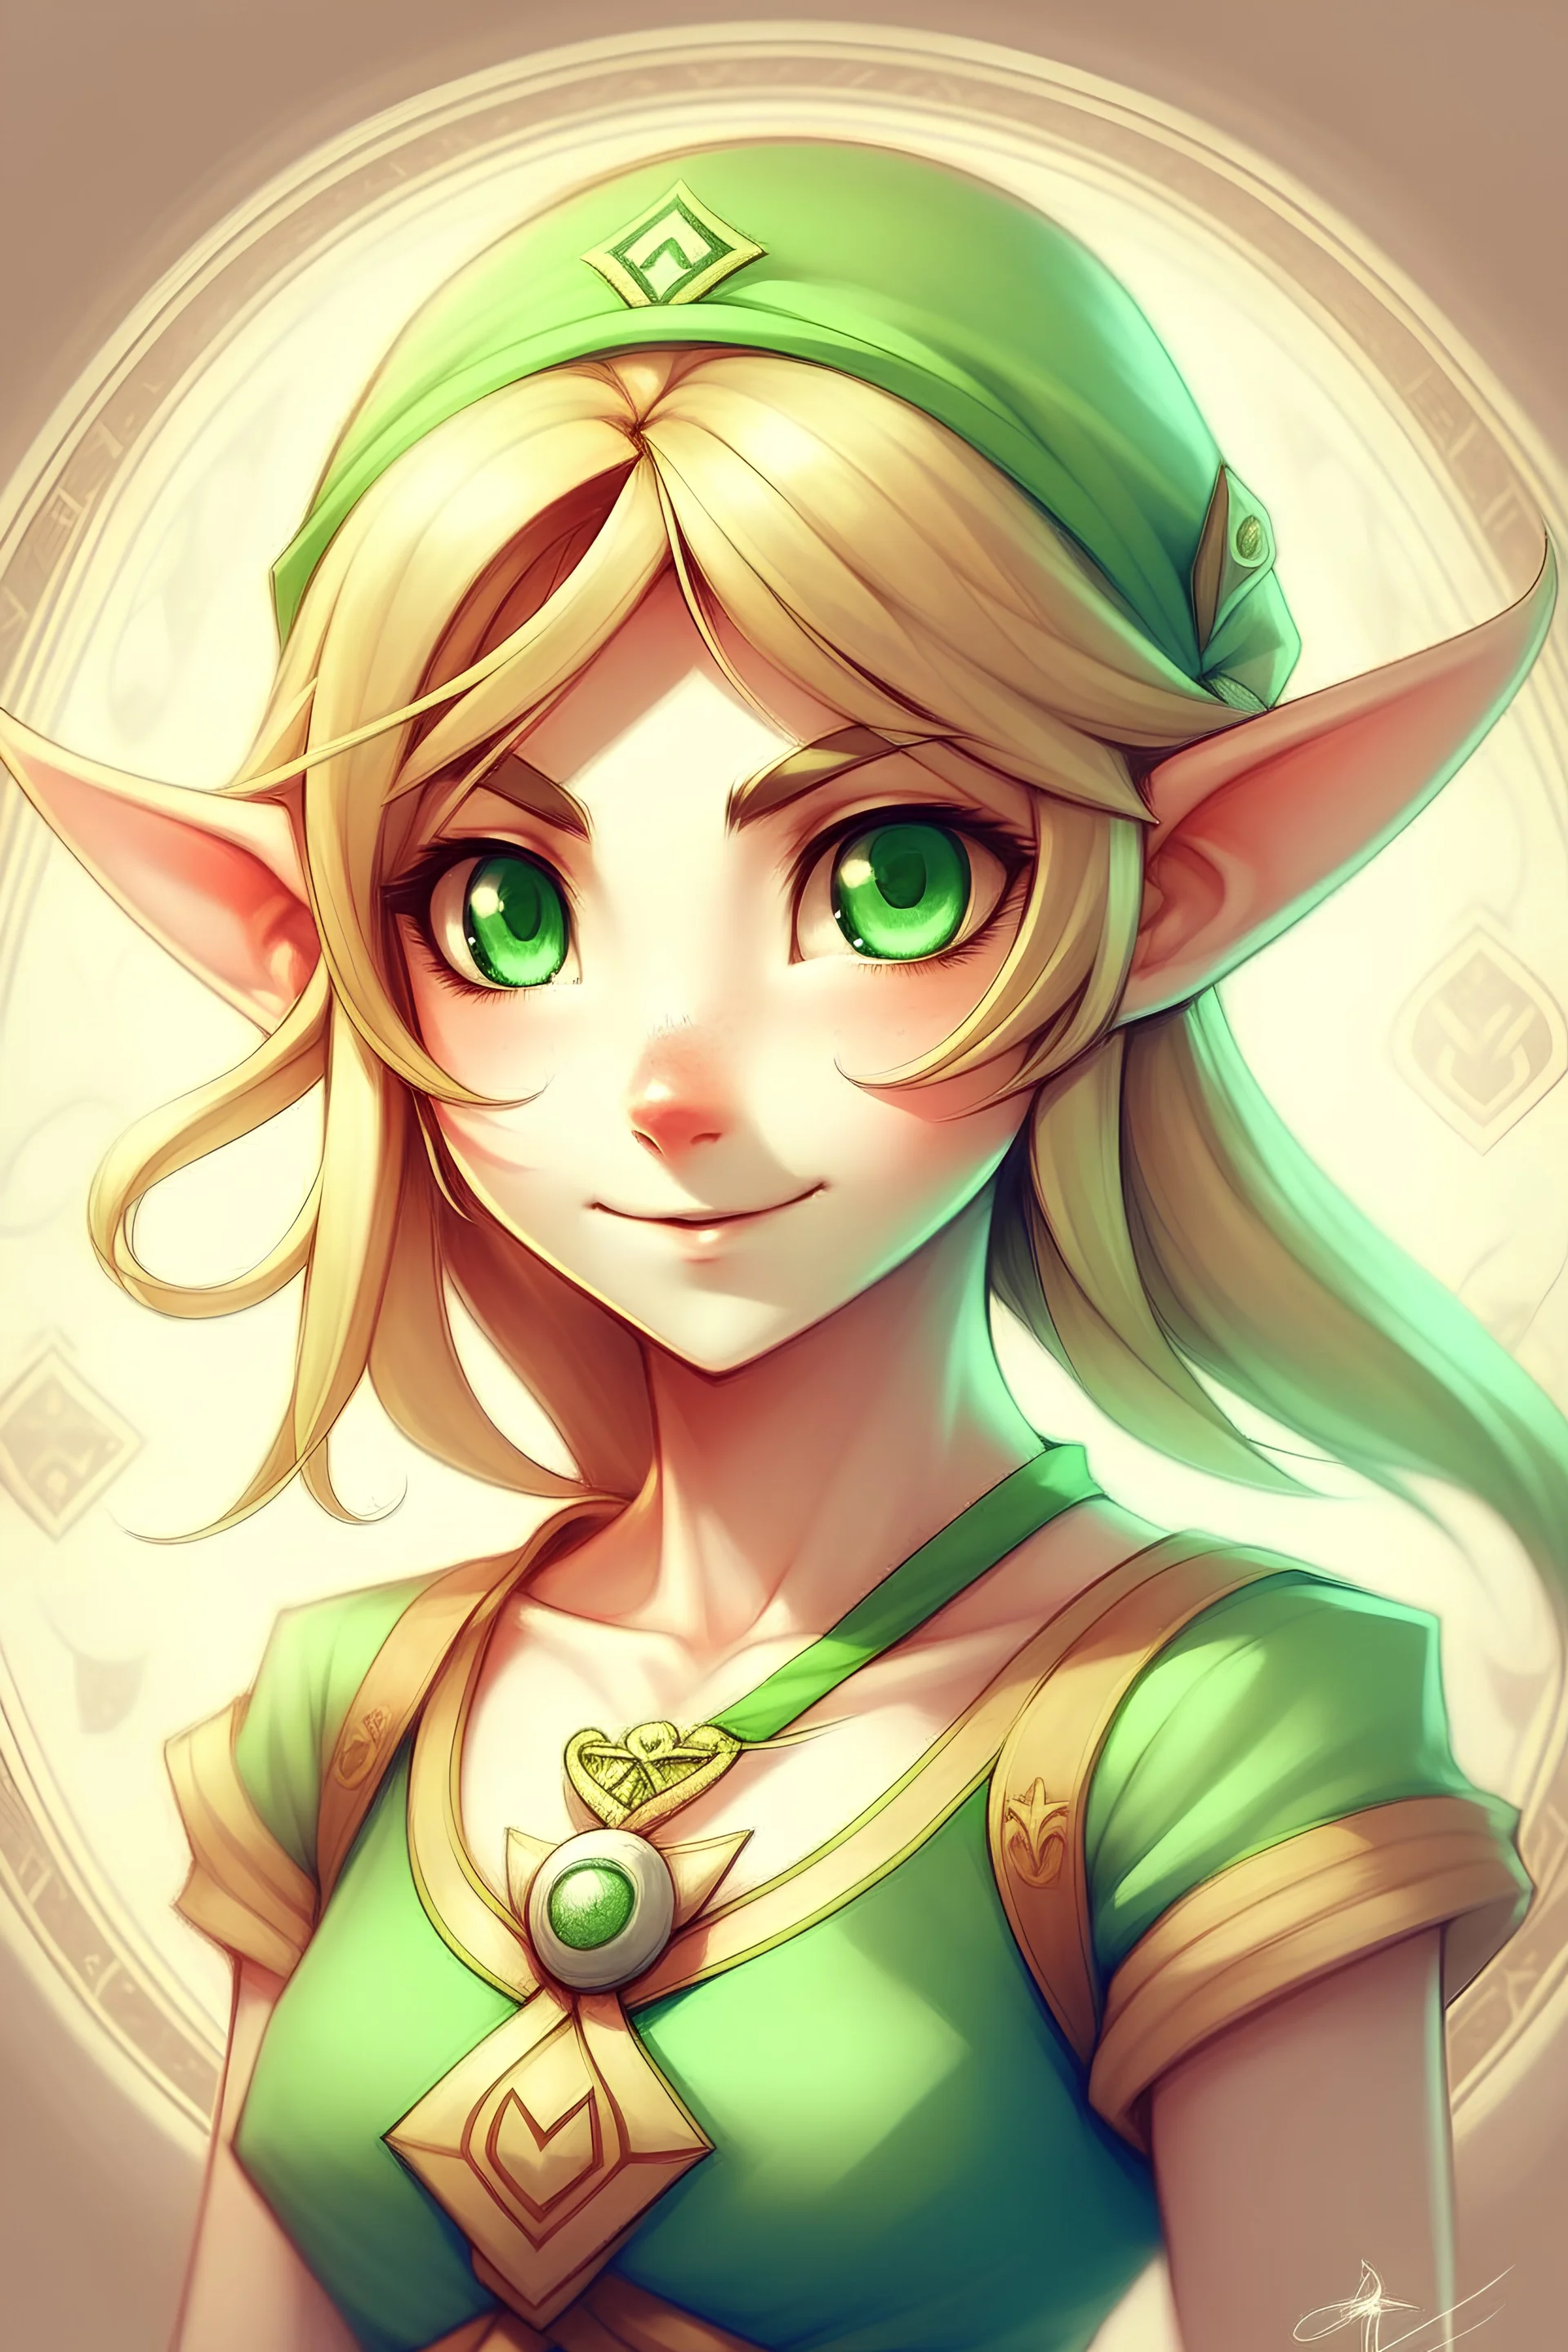 link from legend of Zelda, girly